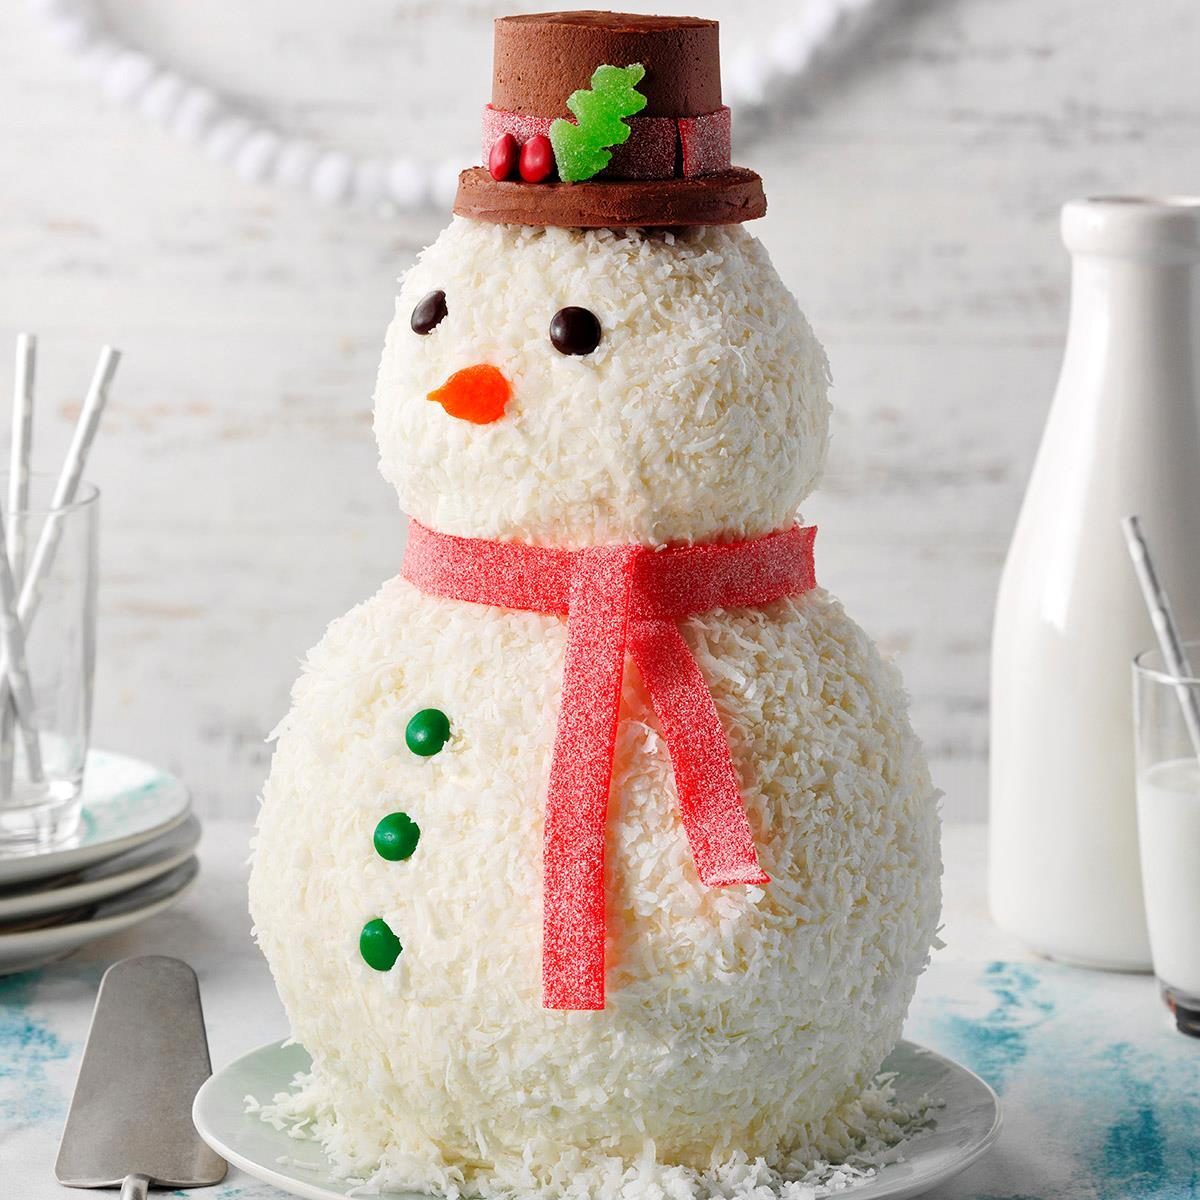 Nordic Ware snowman Pan / 3D Cake Mold Excellent 